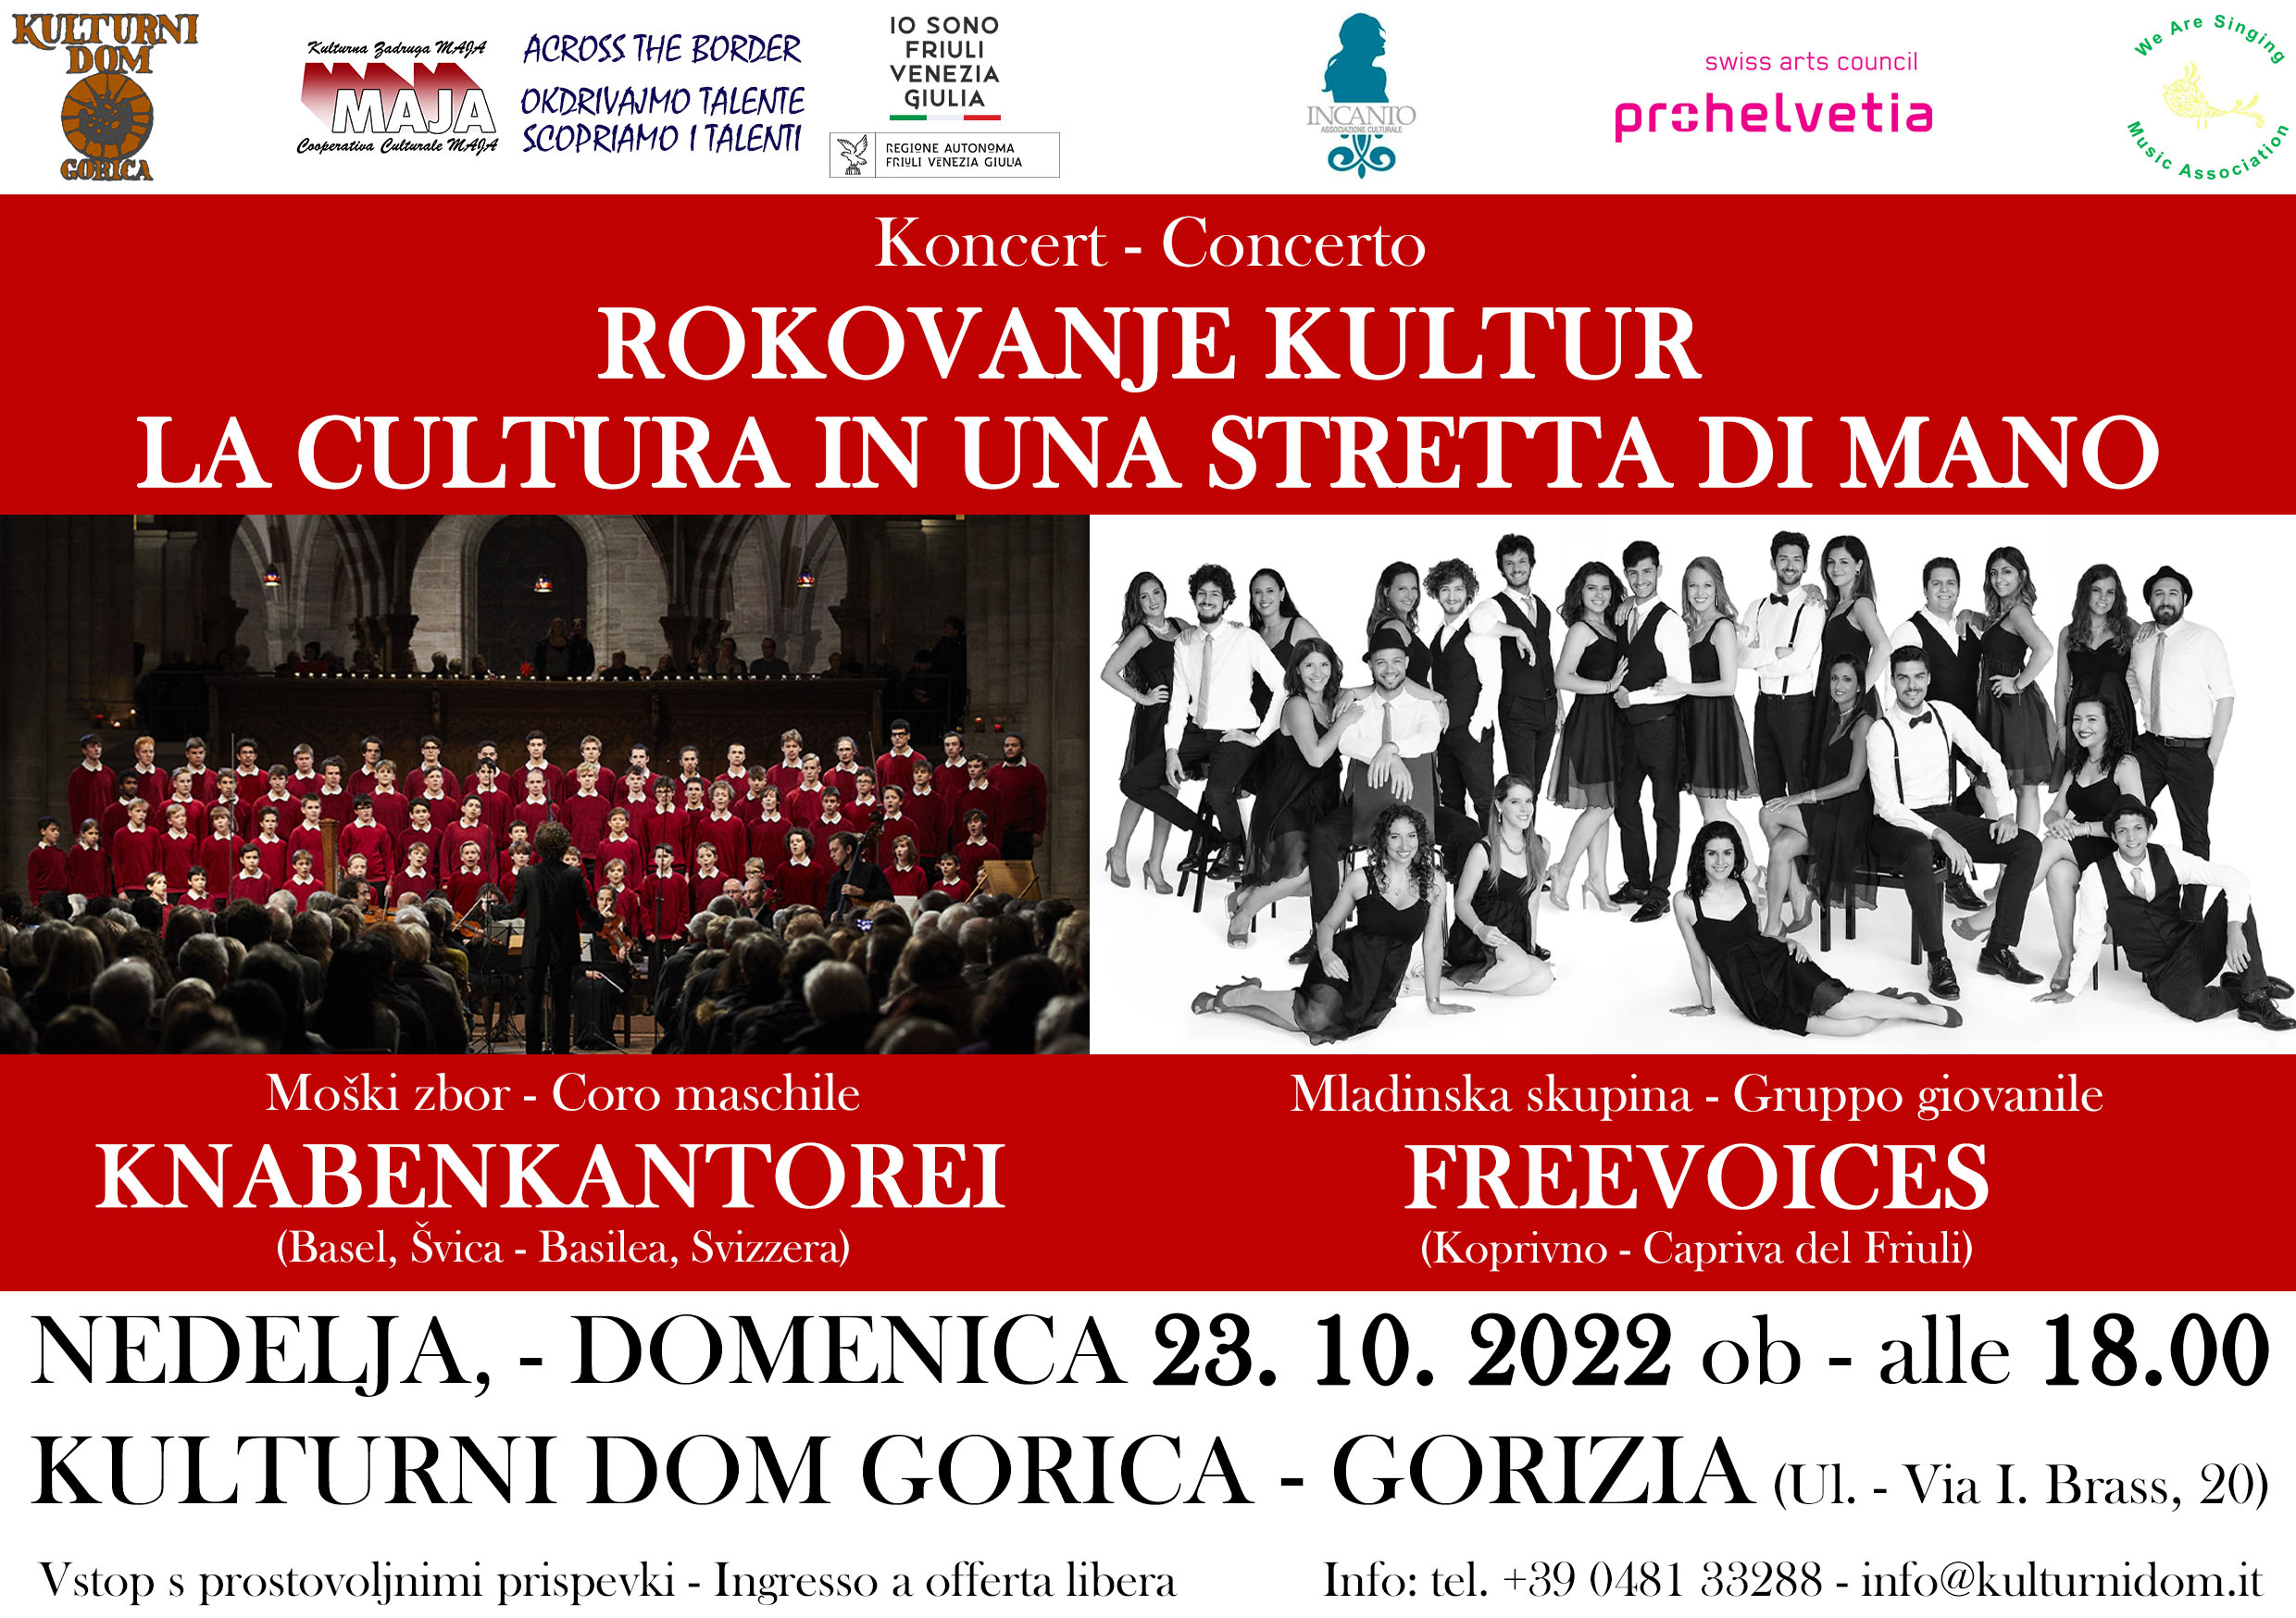 KNABENKANTOREI (CH) & FREEVOICES (Capriva del Friuli) in concert